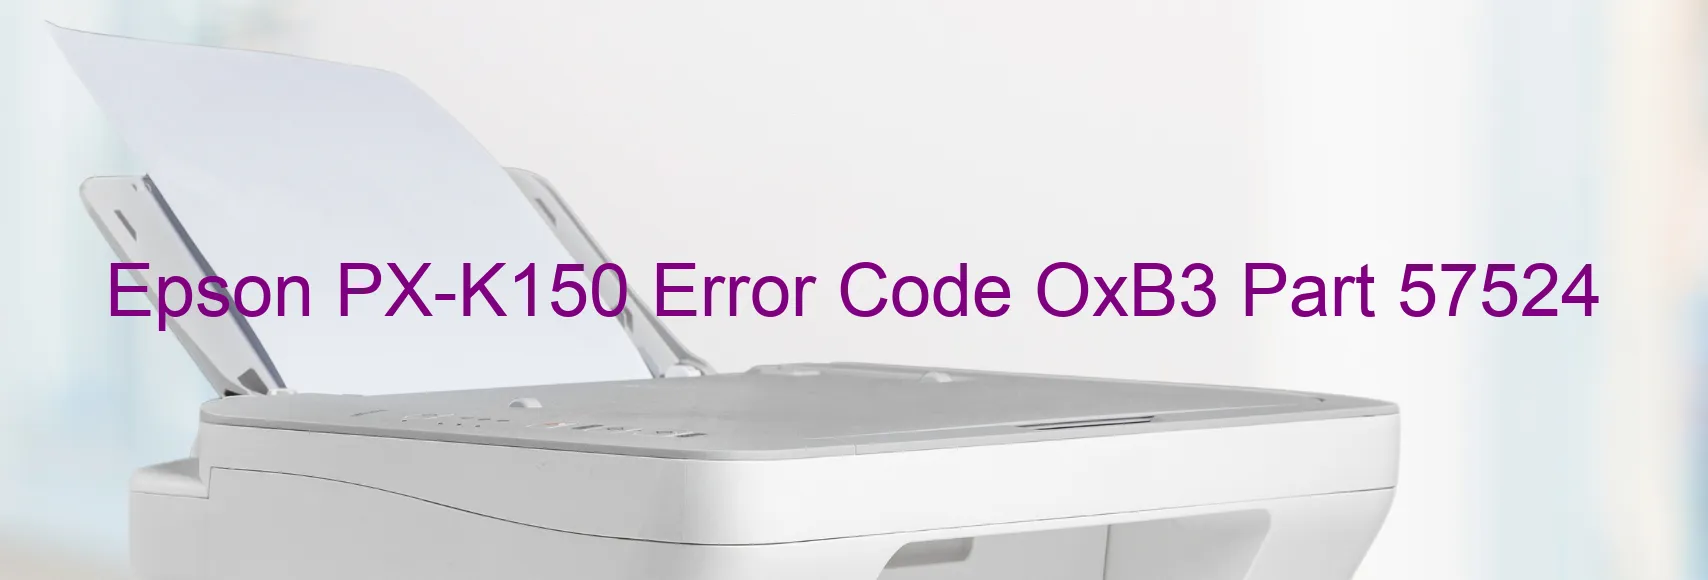 Epson PX-K150 Error Code OxB3 Part 57524